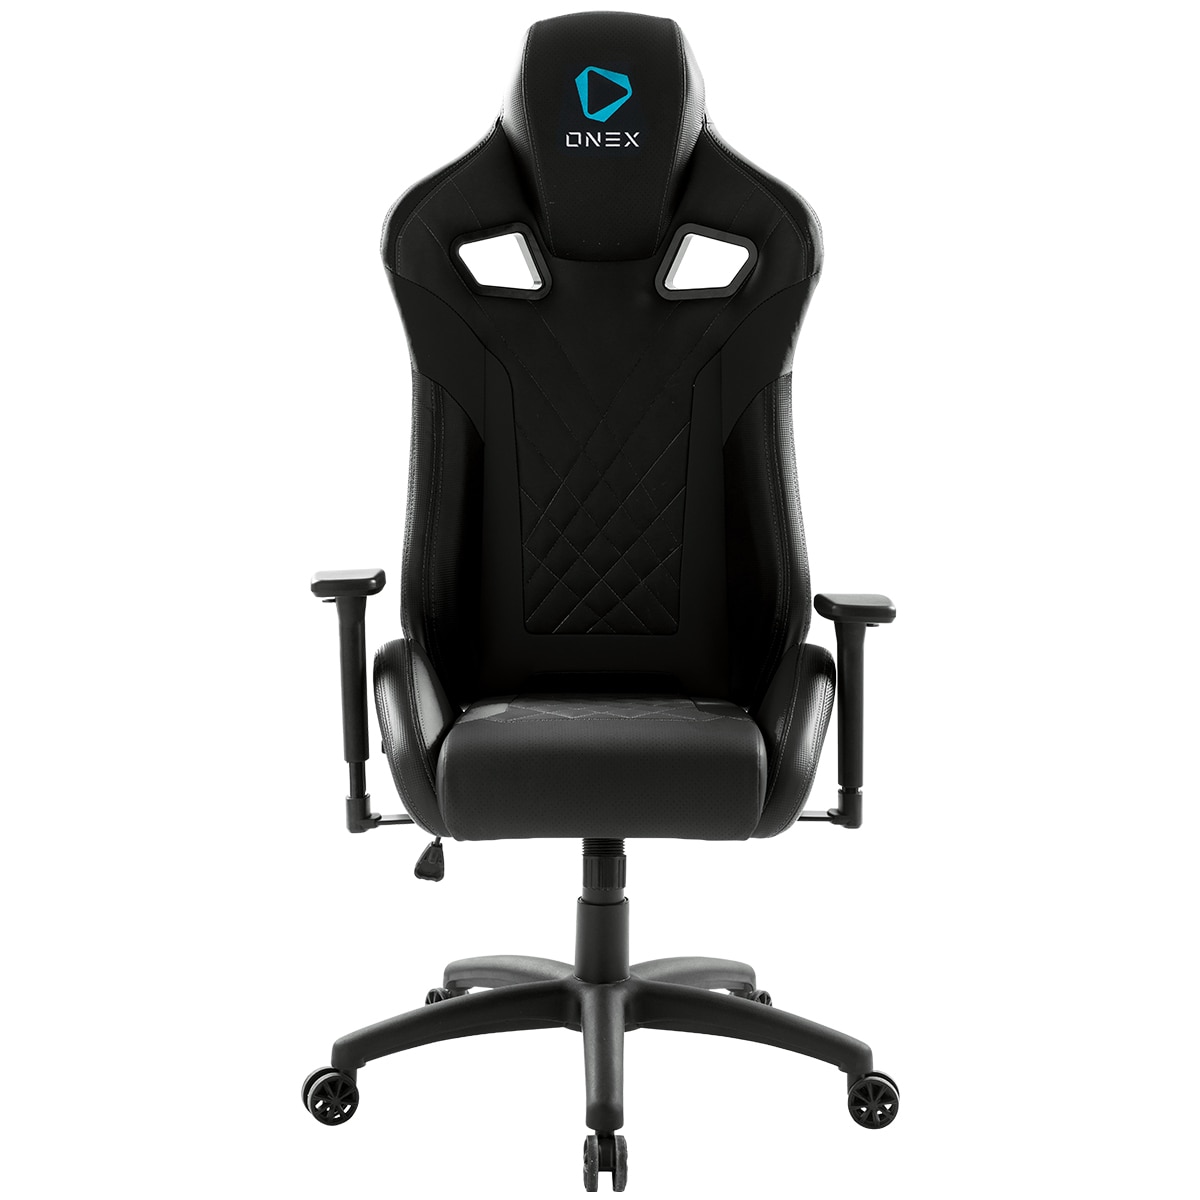 Onex Gx5 Series Gaming Chair Black Costco Australia